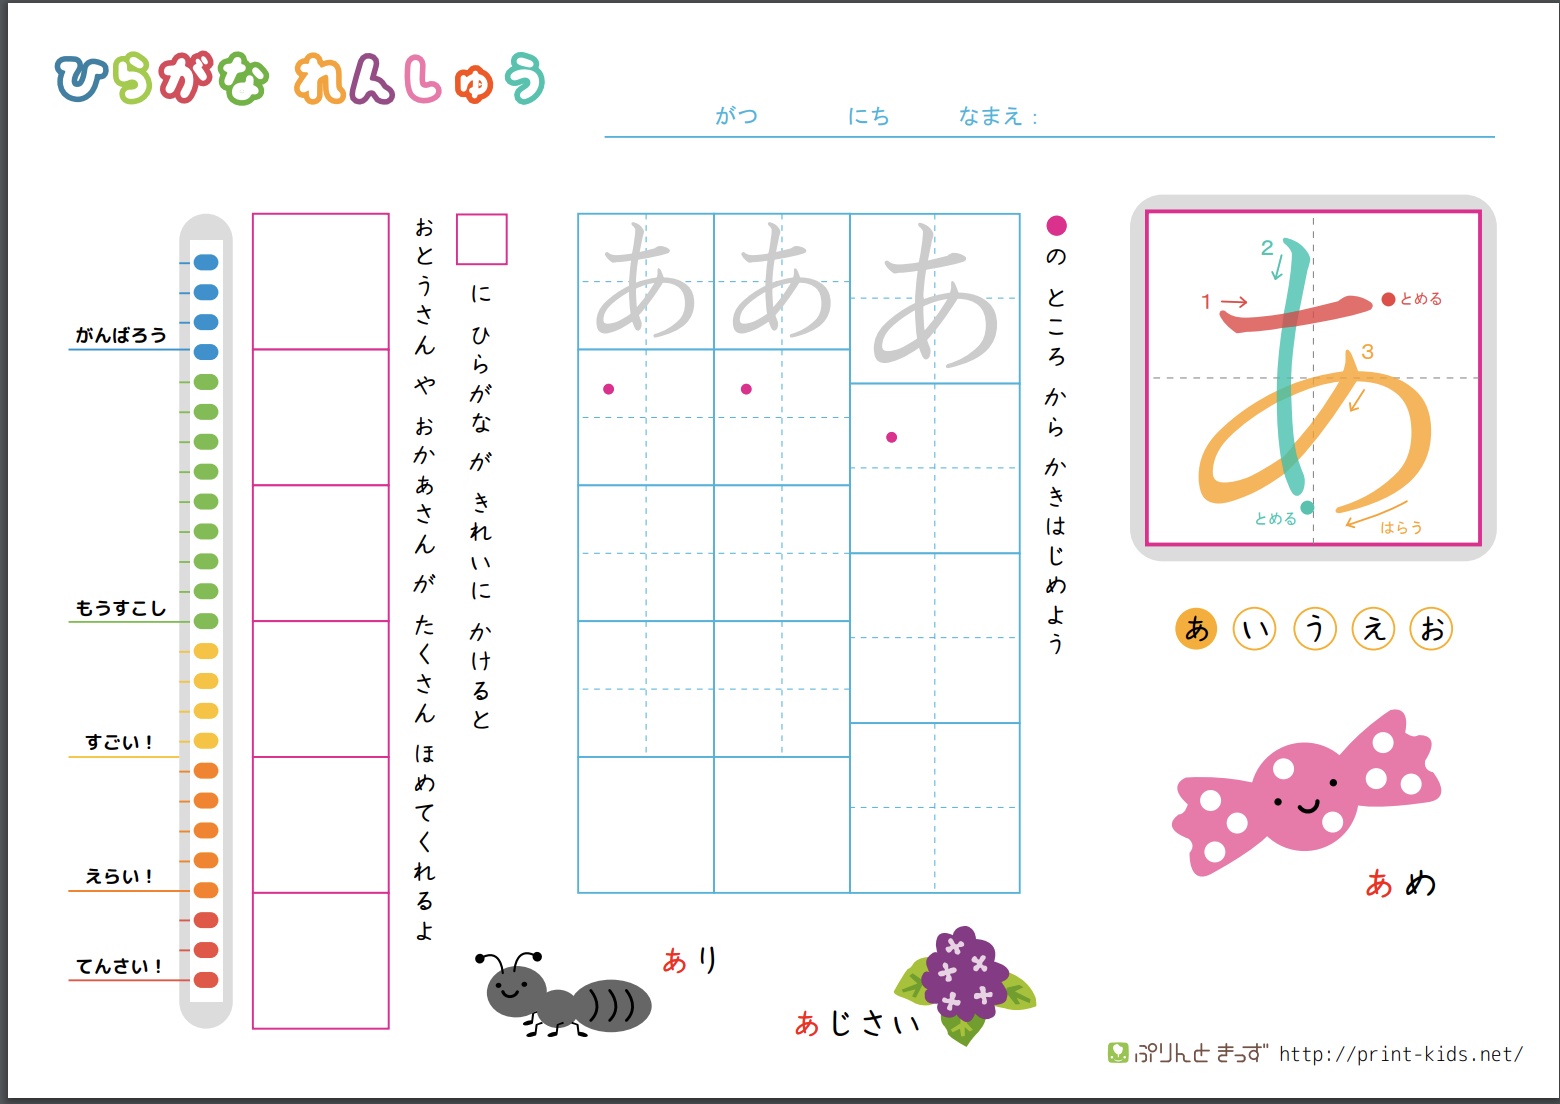 Cara belajar hiragana dan katakana - Ondeh Mandeh Japan